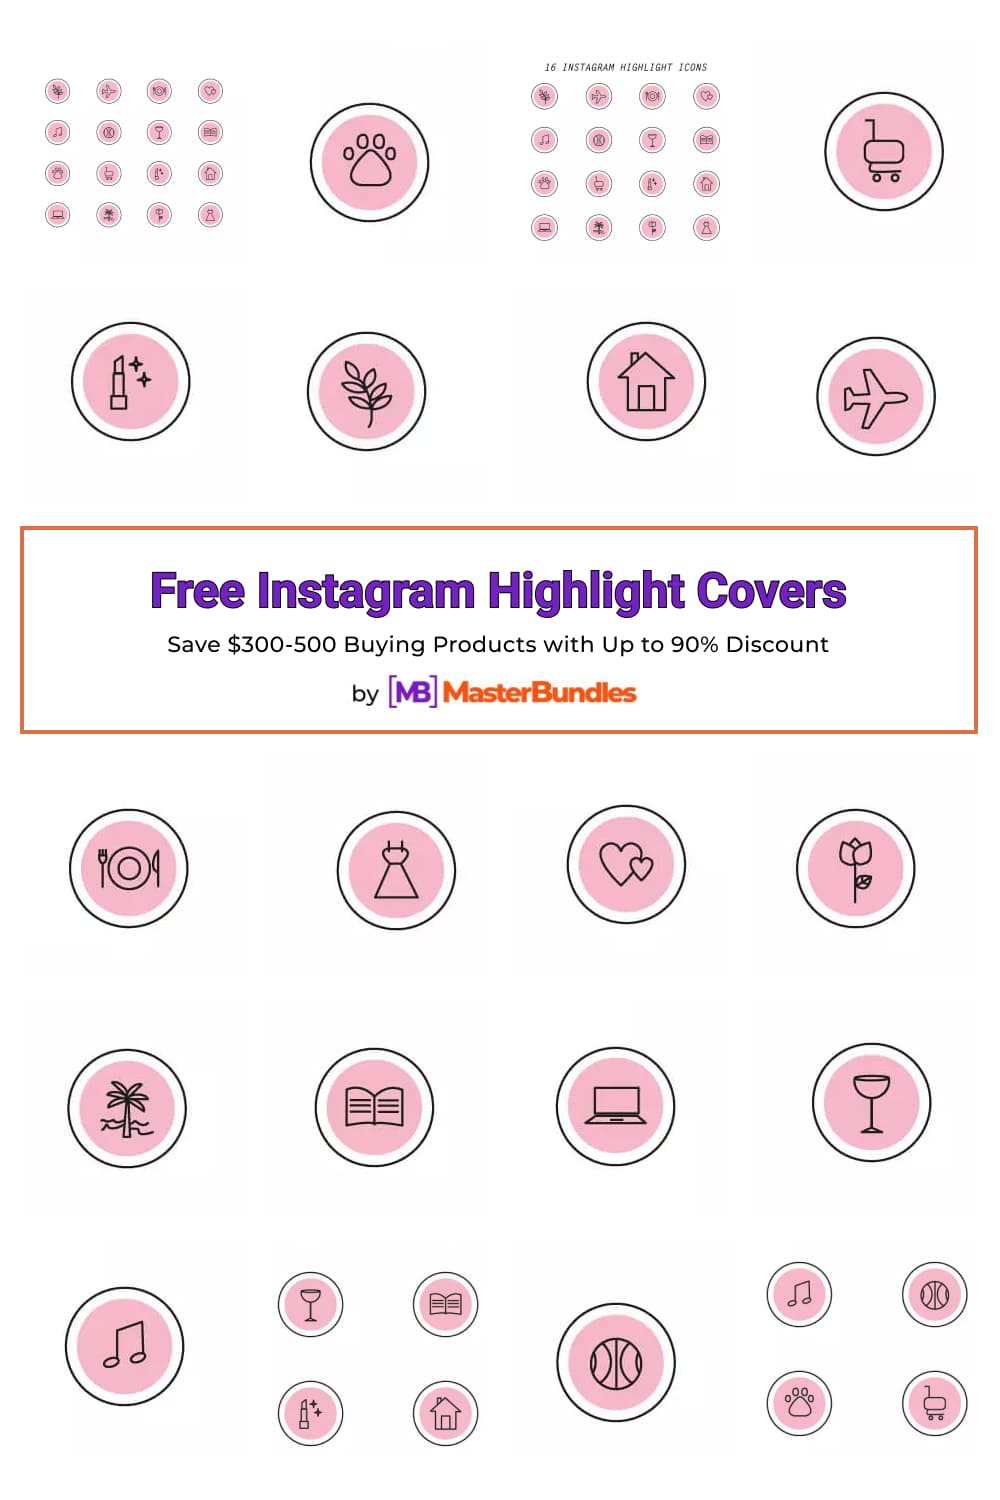 Free Instagram Highlight Covers Pinterest image.